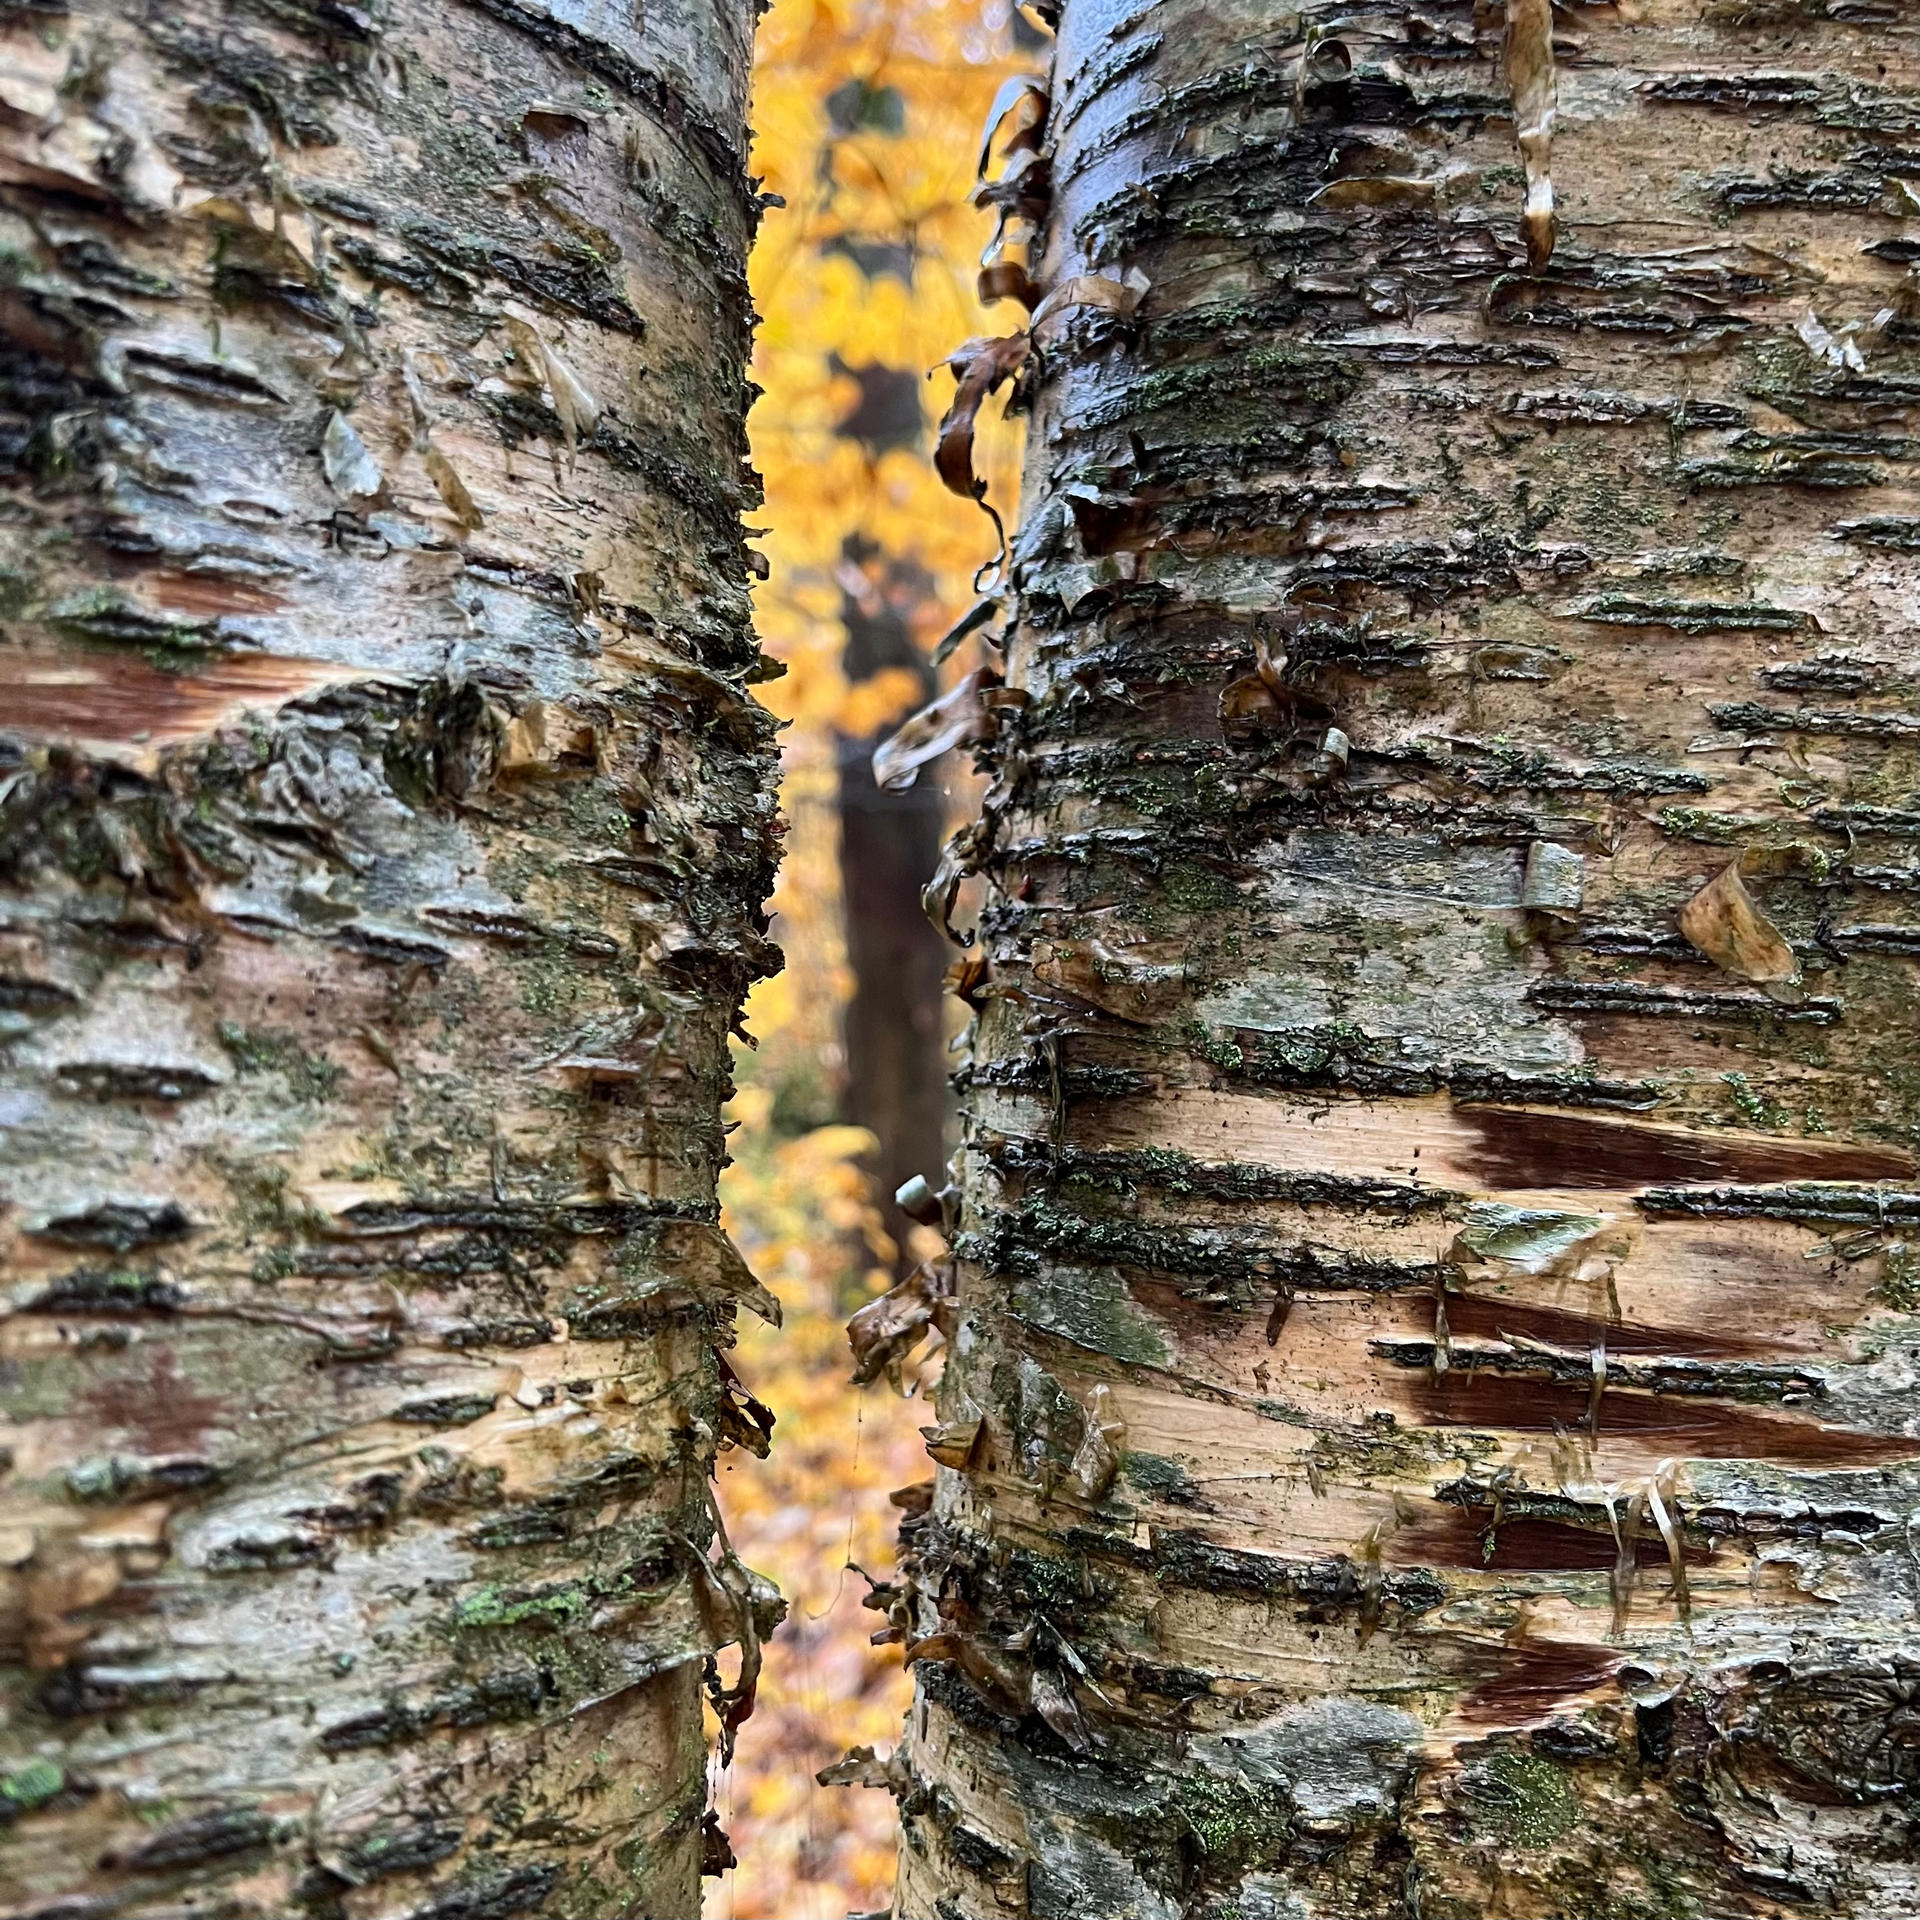 Birch Tree Wood Bark Texture by Enchantedgal-Stock on DeviantArt